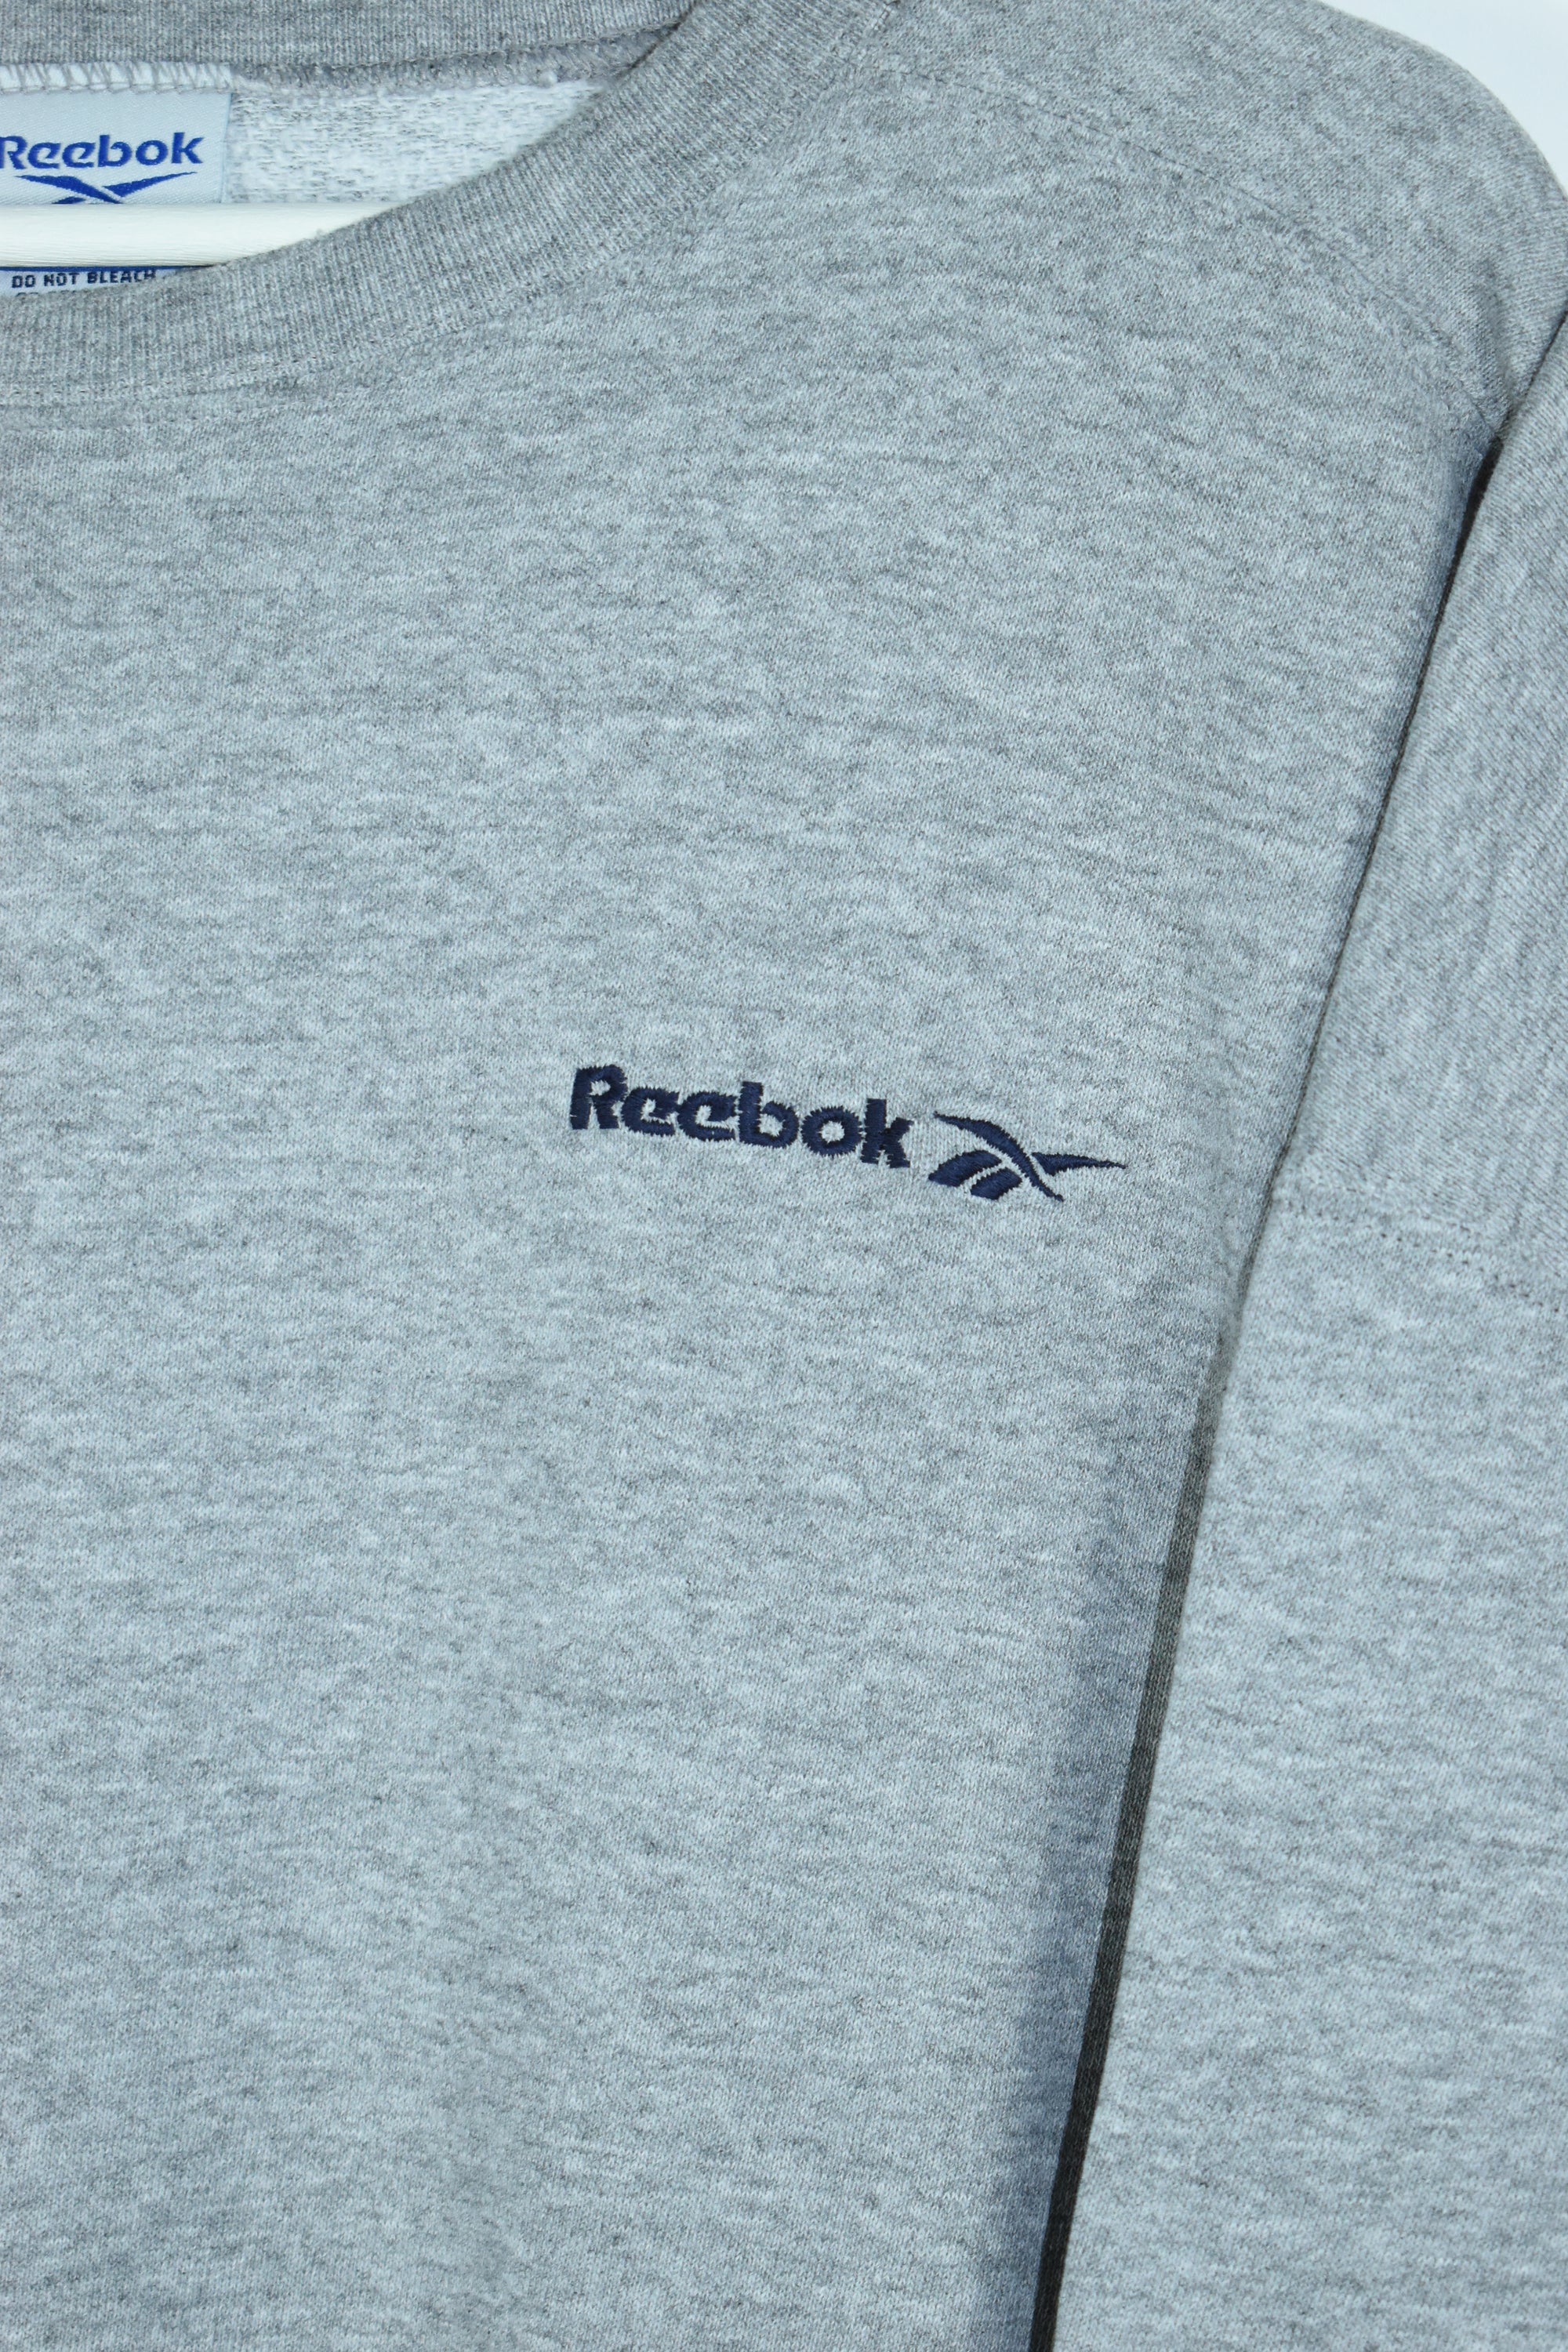 Vintage Reebok Embroidery Logo Sweatshirt LARGE /XL